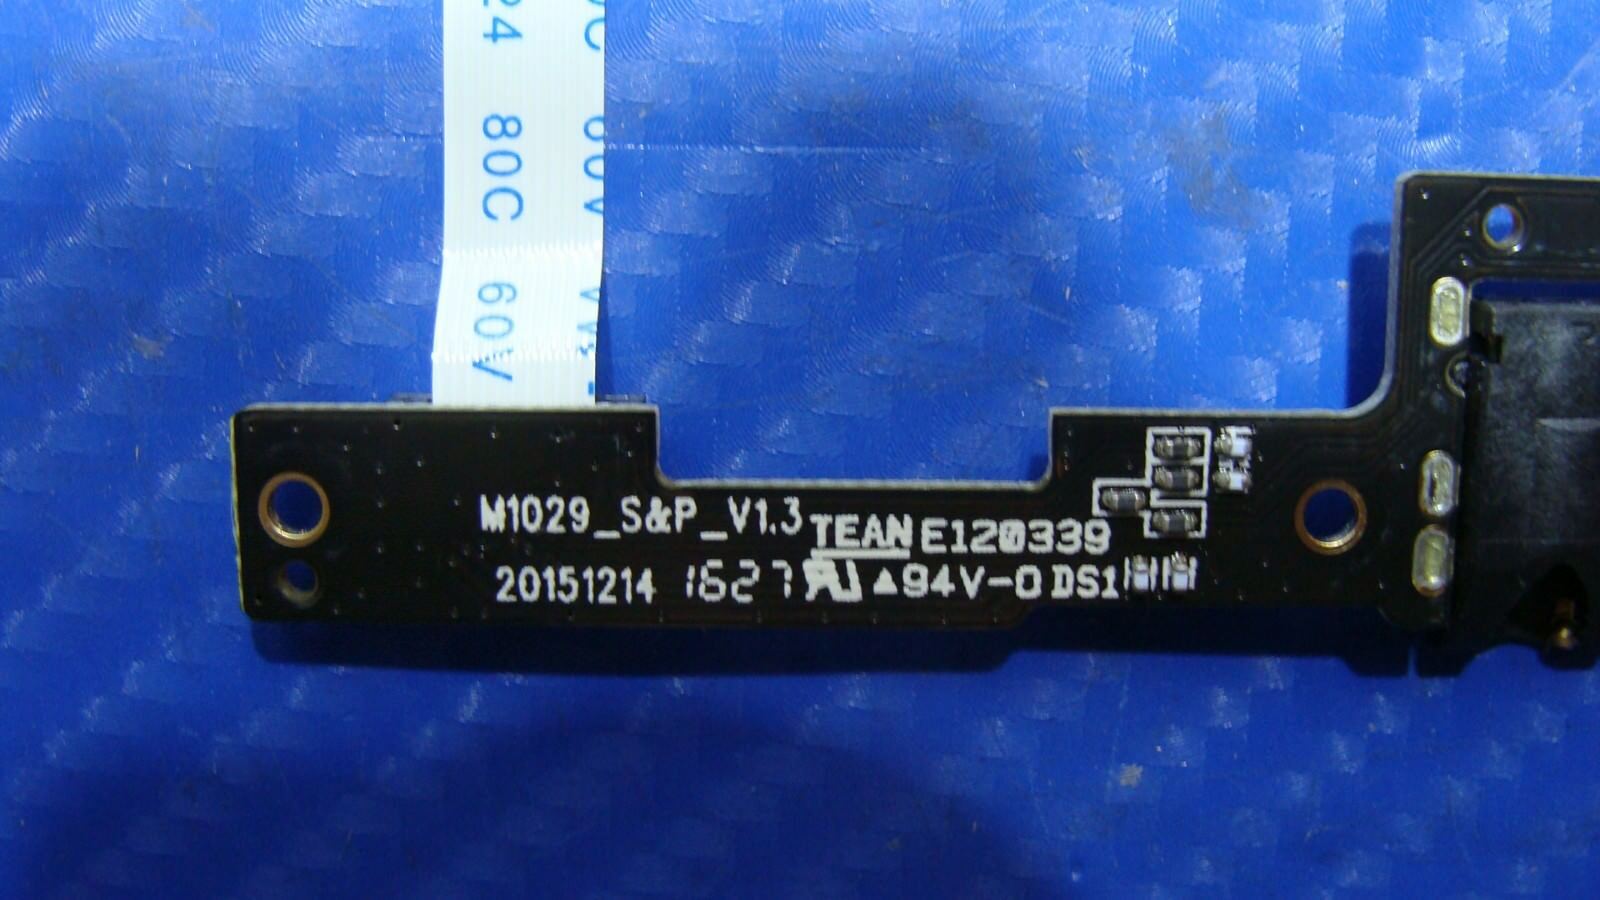 Lenovo Miix 310-10icr 10.1